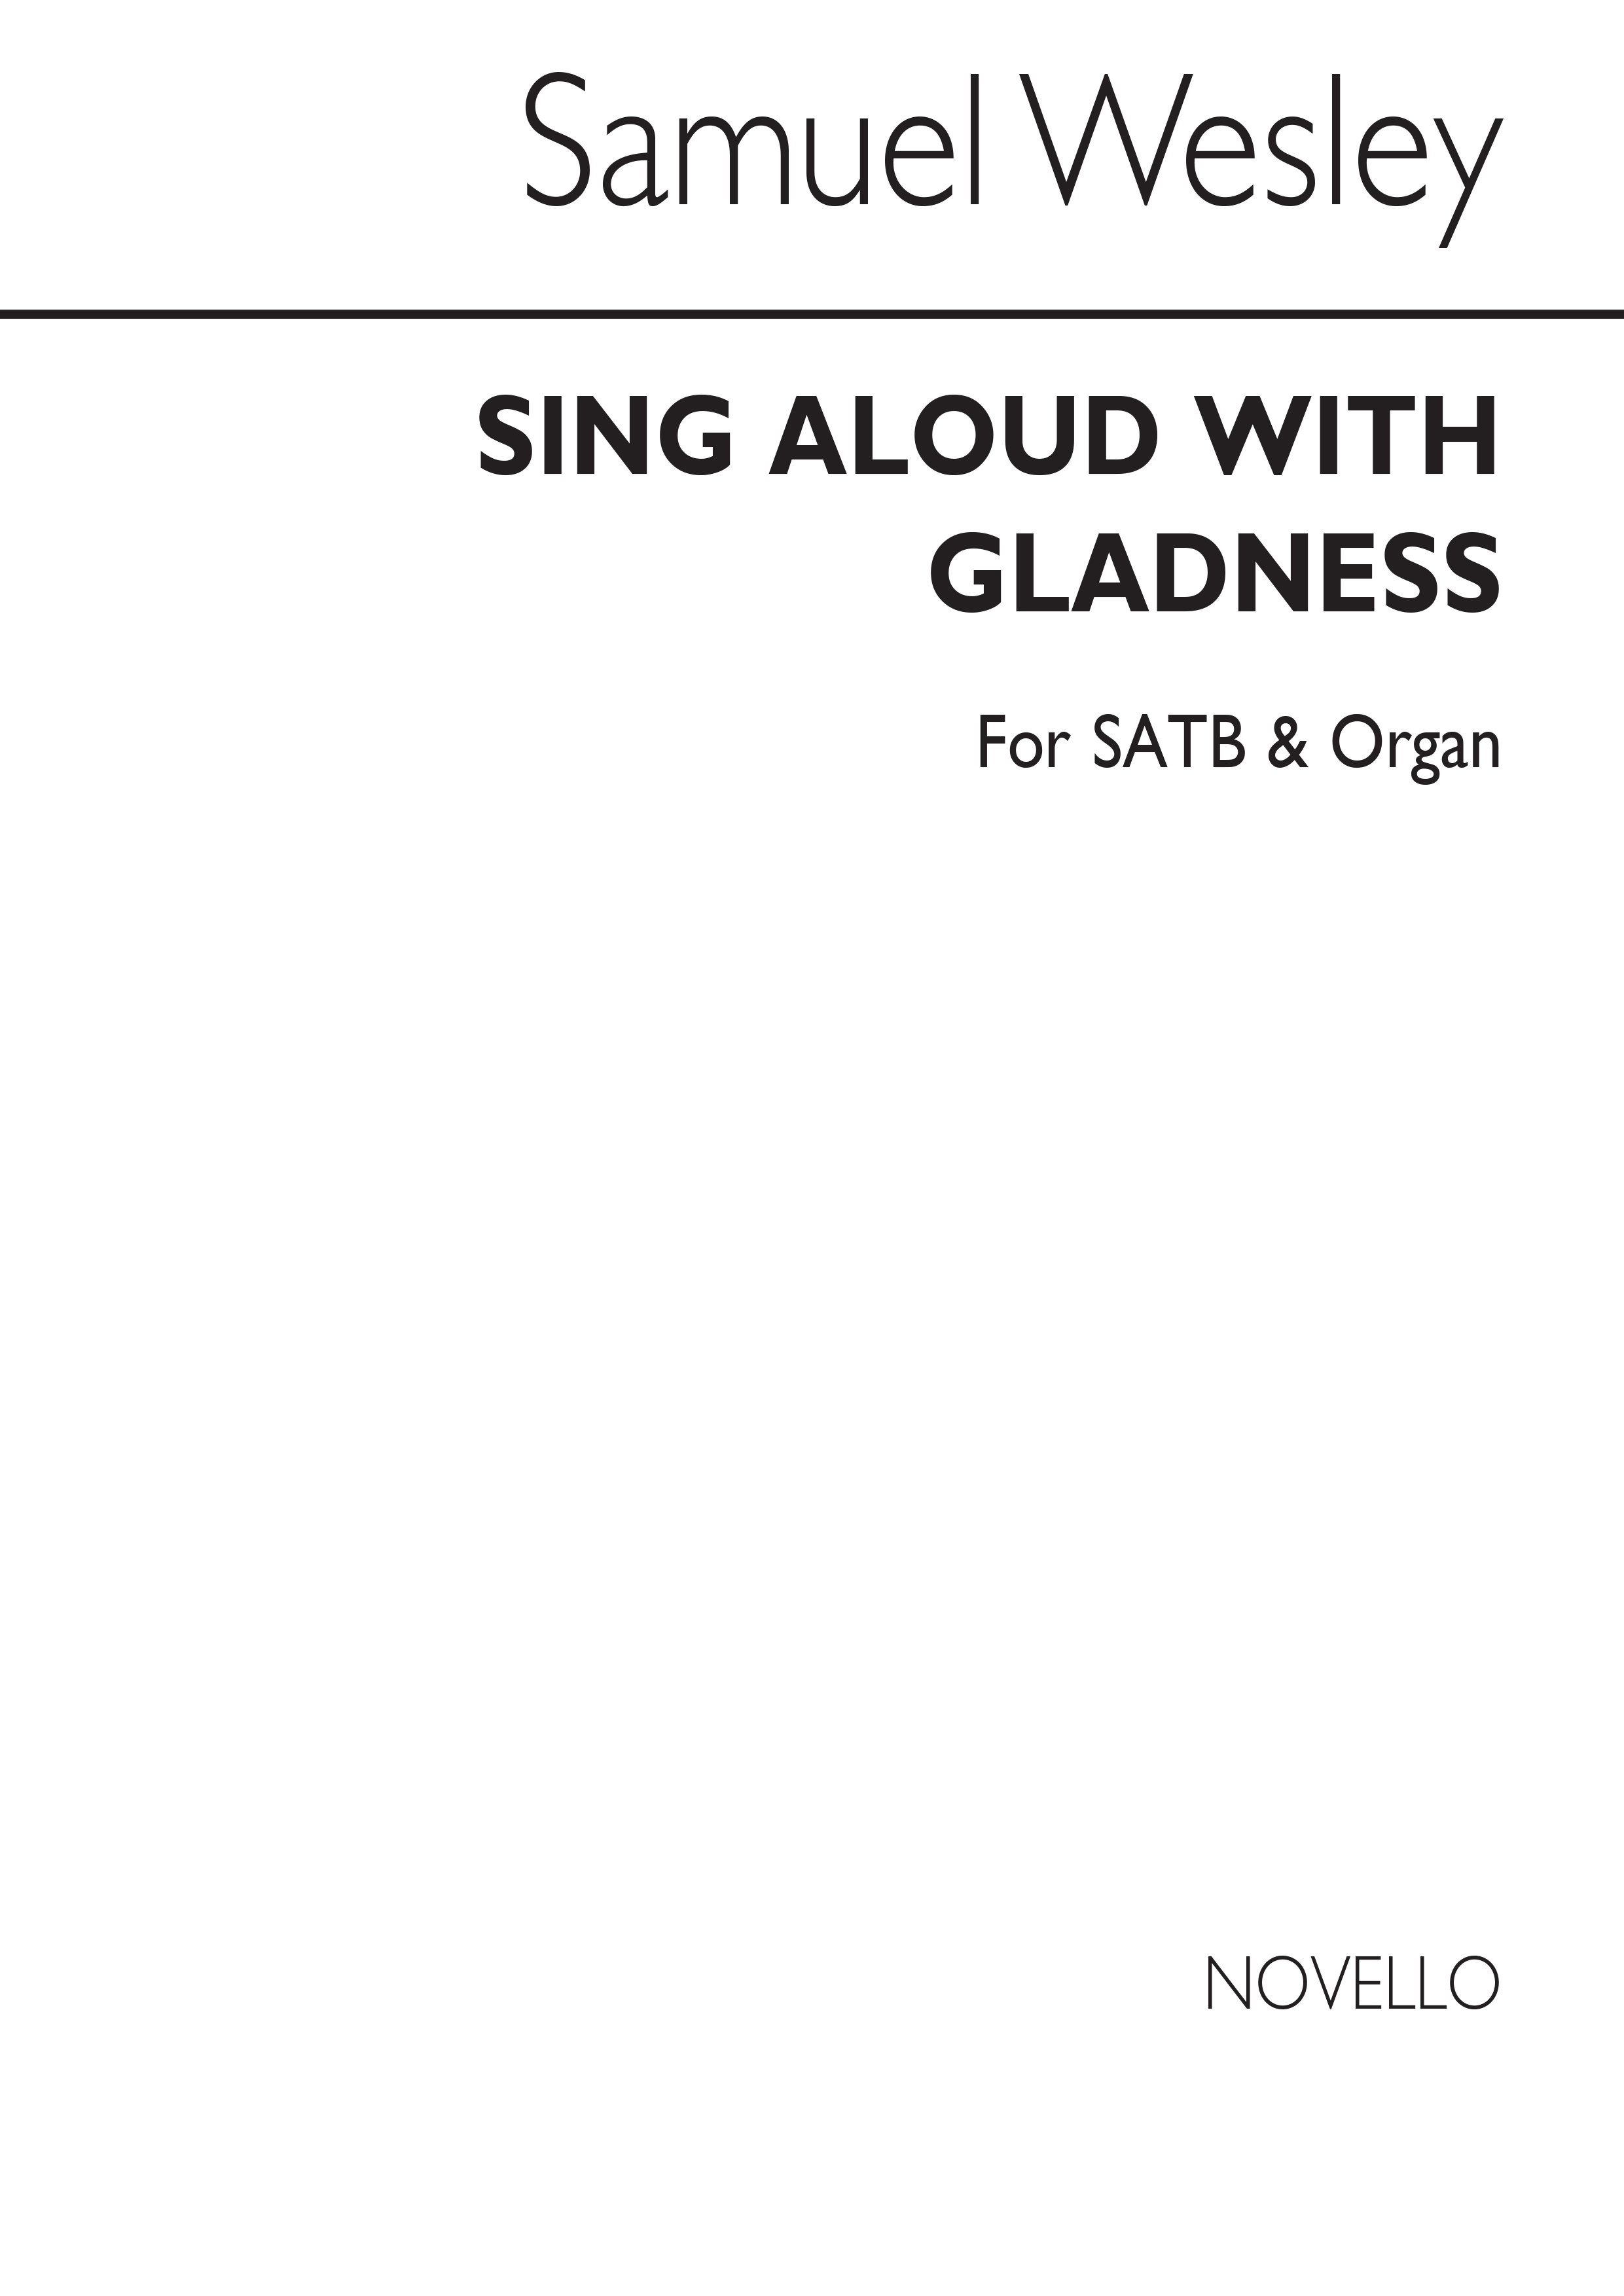 Samuel Wesley: Sing Aloud With Gladness (Exultate Deo)